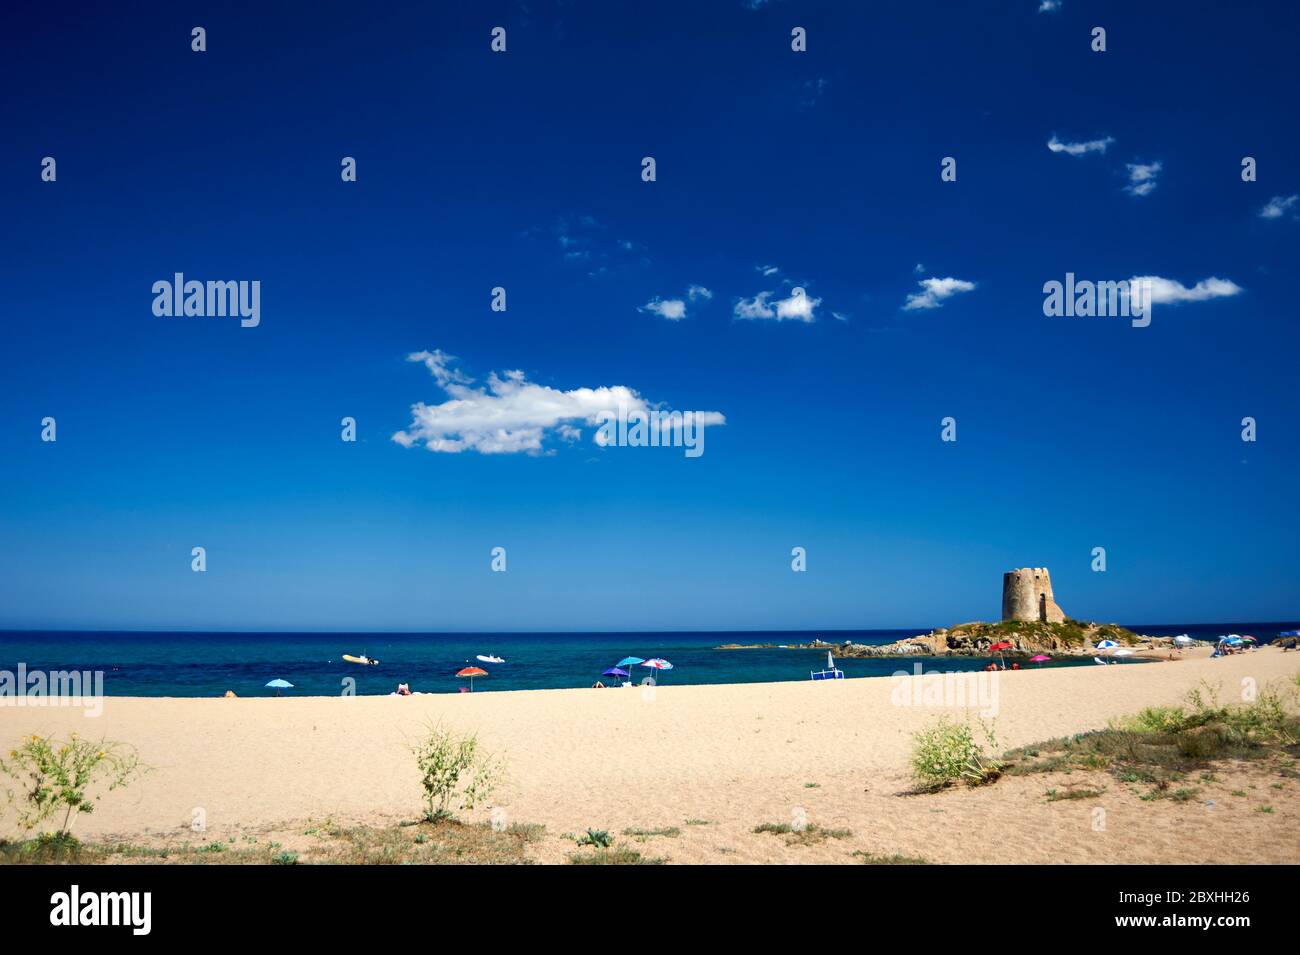 Sardinian beach near Torre di Bari, Italy Stock Photo